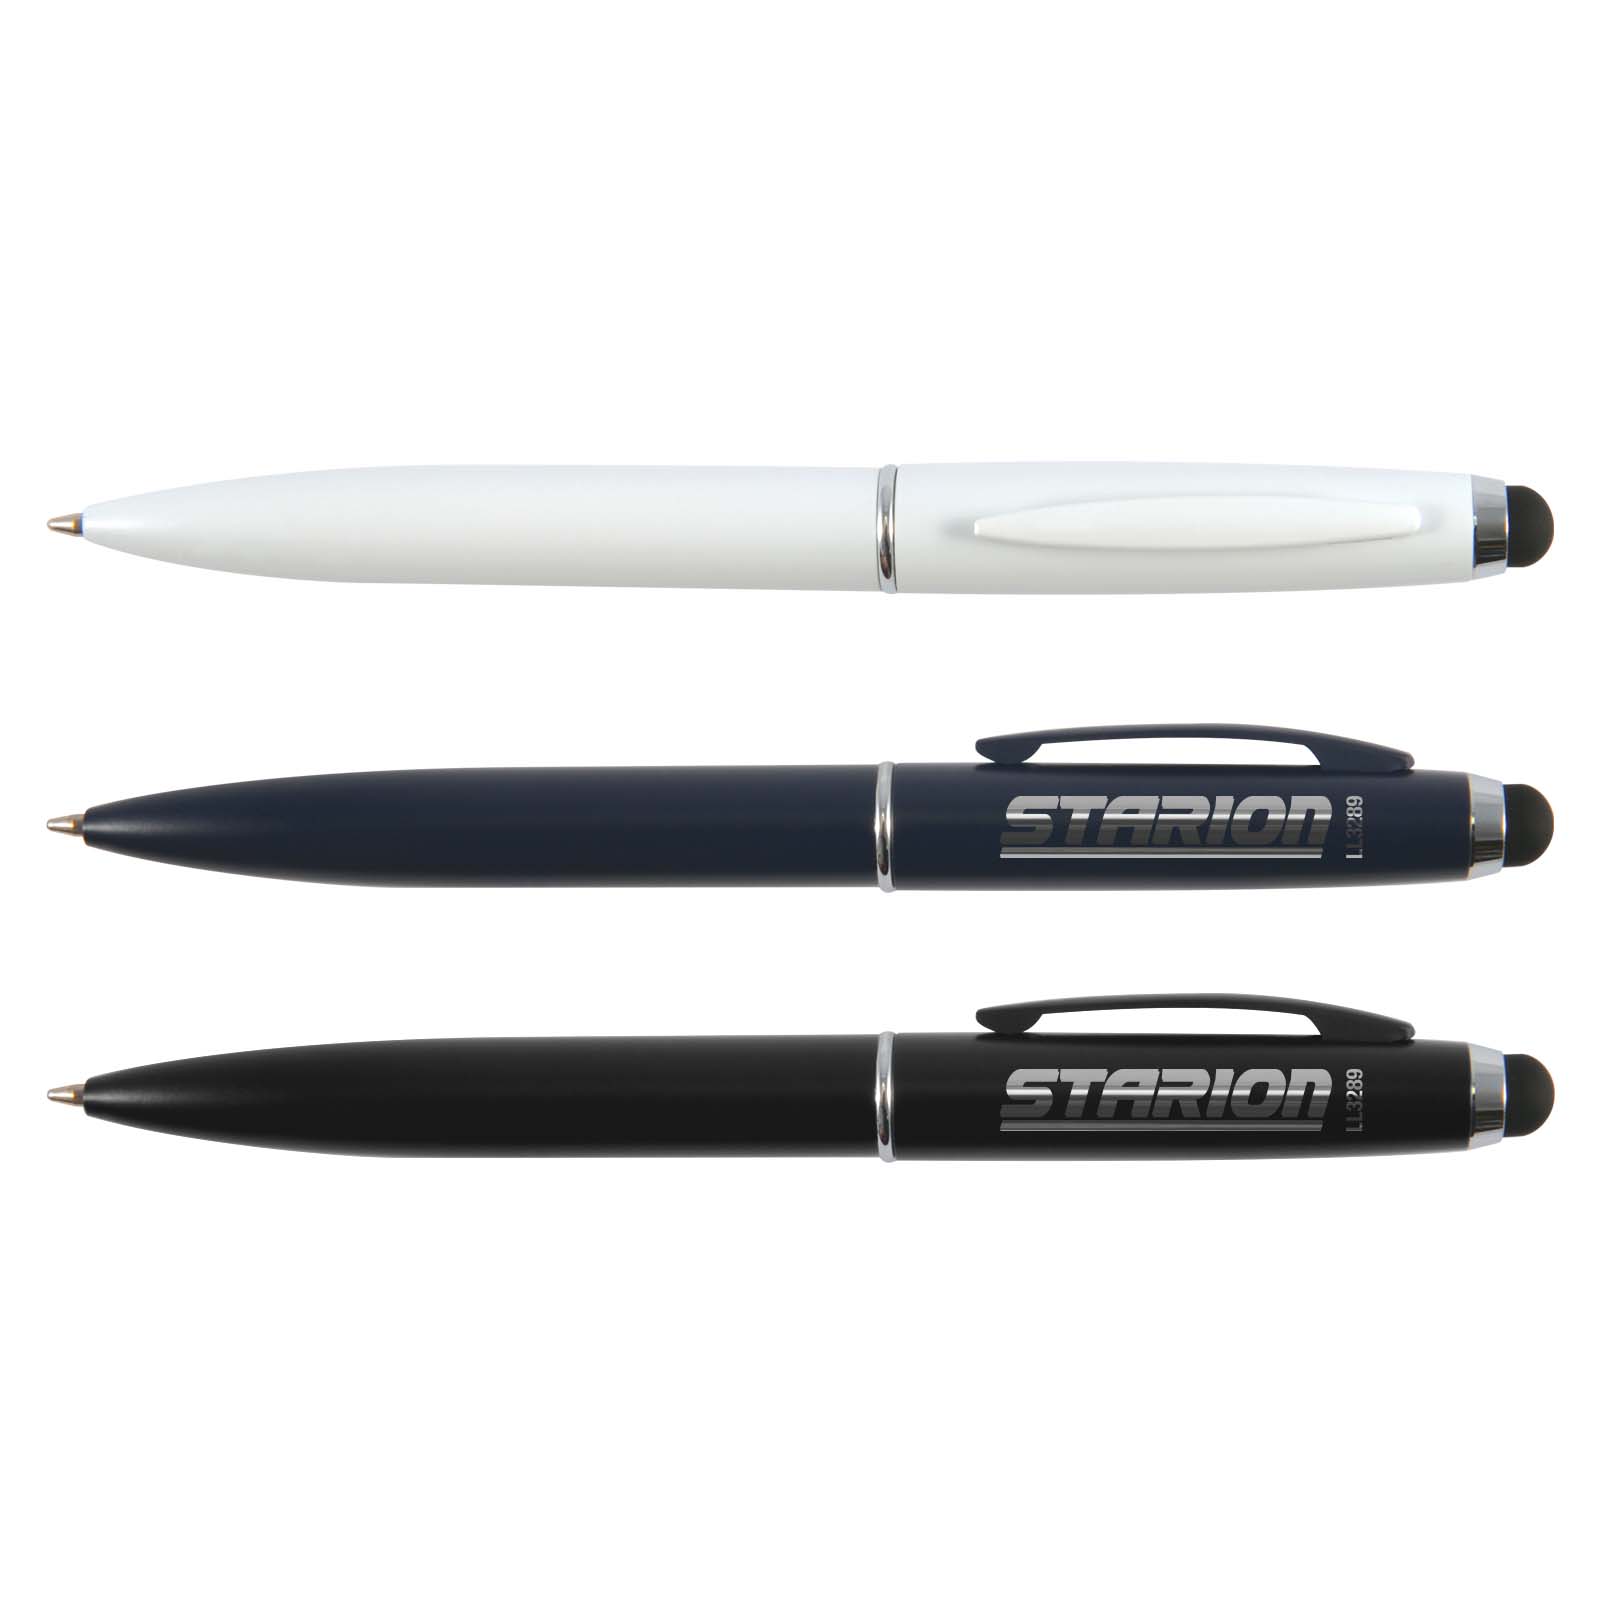 LL4 Starion Pen pen